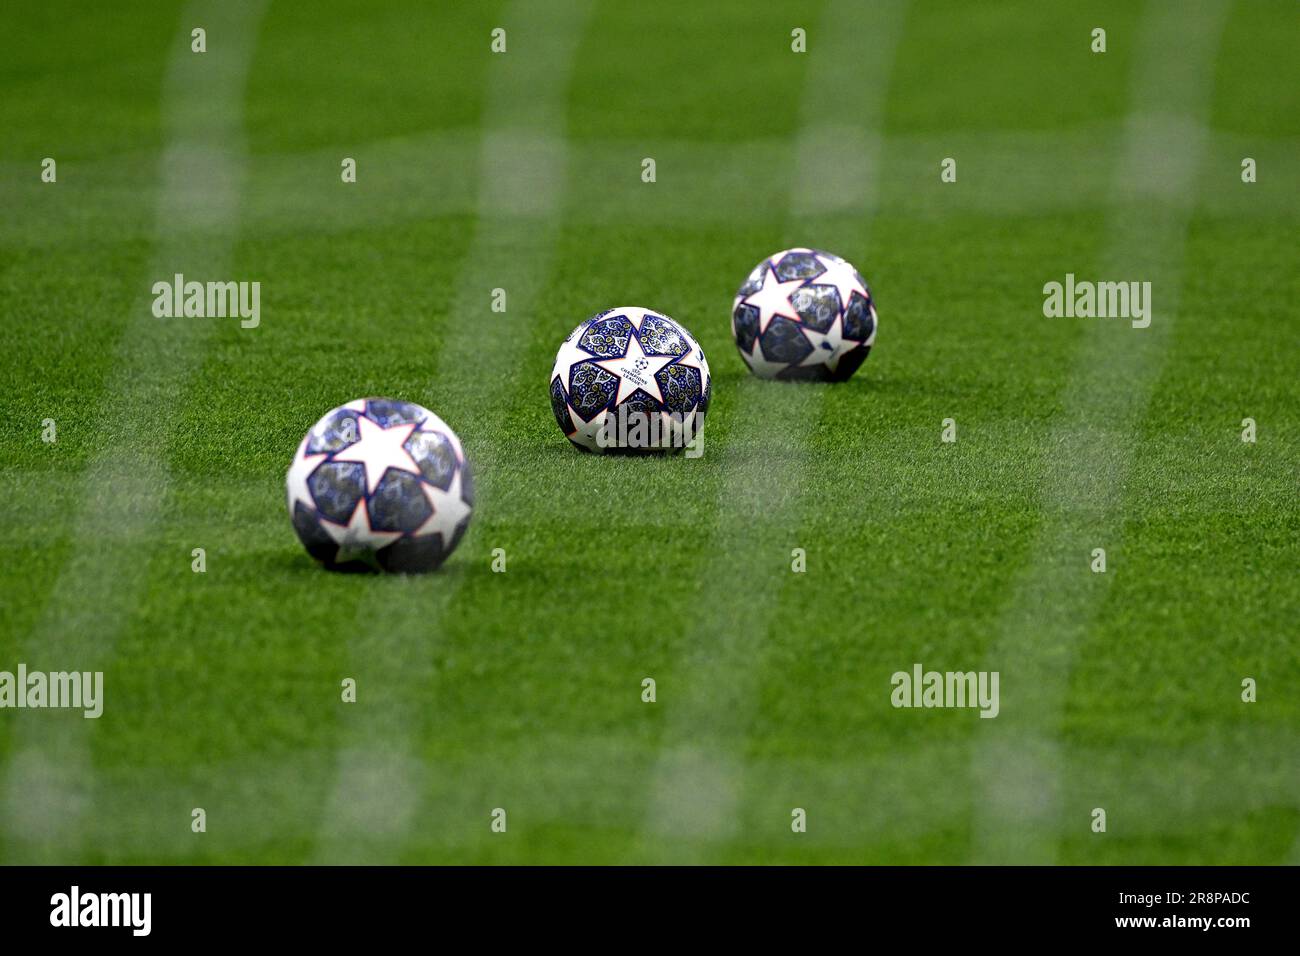 Offizieller UEFA Champions League-Ball auf dem Spielfeld Stockfoto